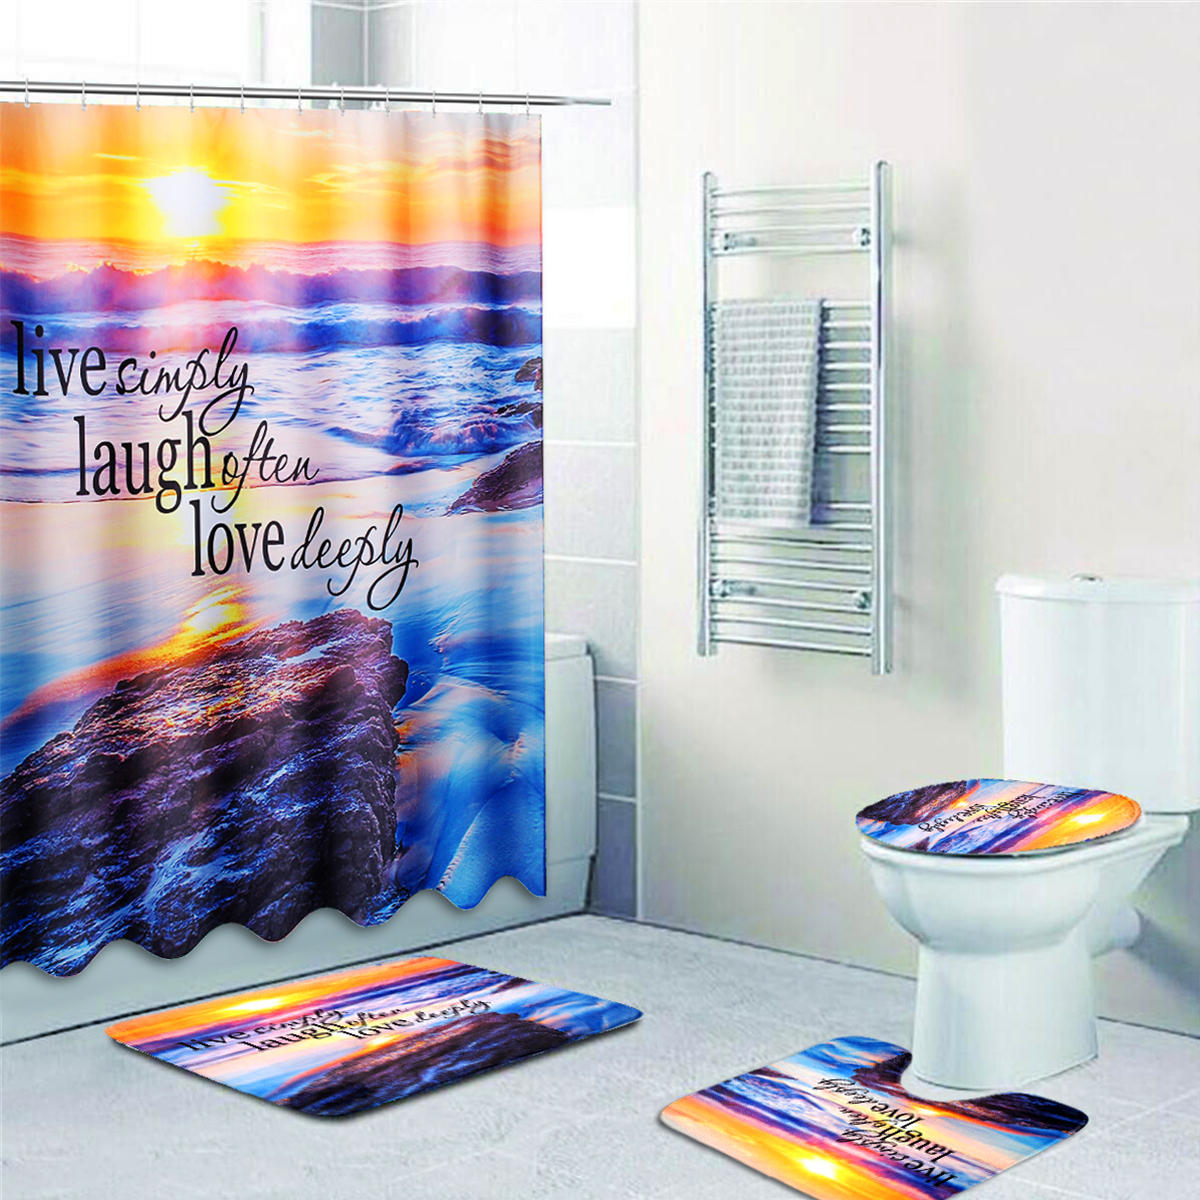 

Sandy Beach Waterproof Bathroom Shower Curtain Toilet Cover Mat Non-Slip Rug Set